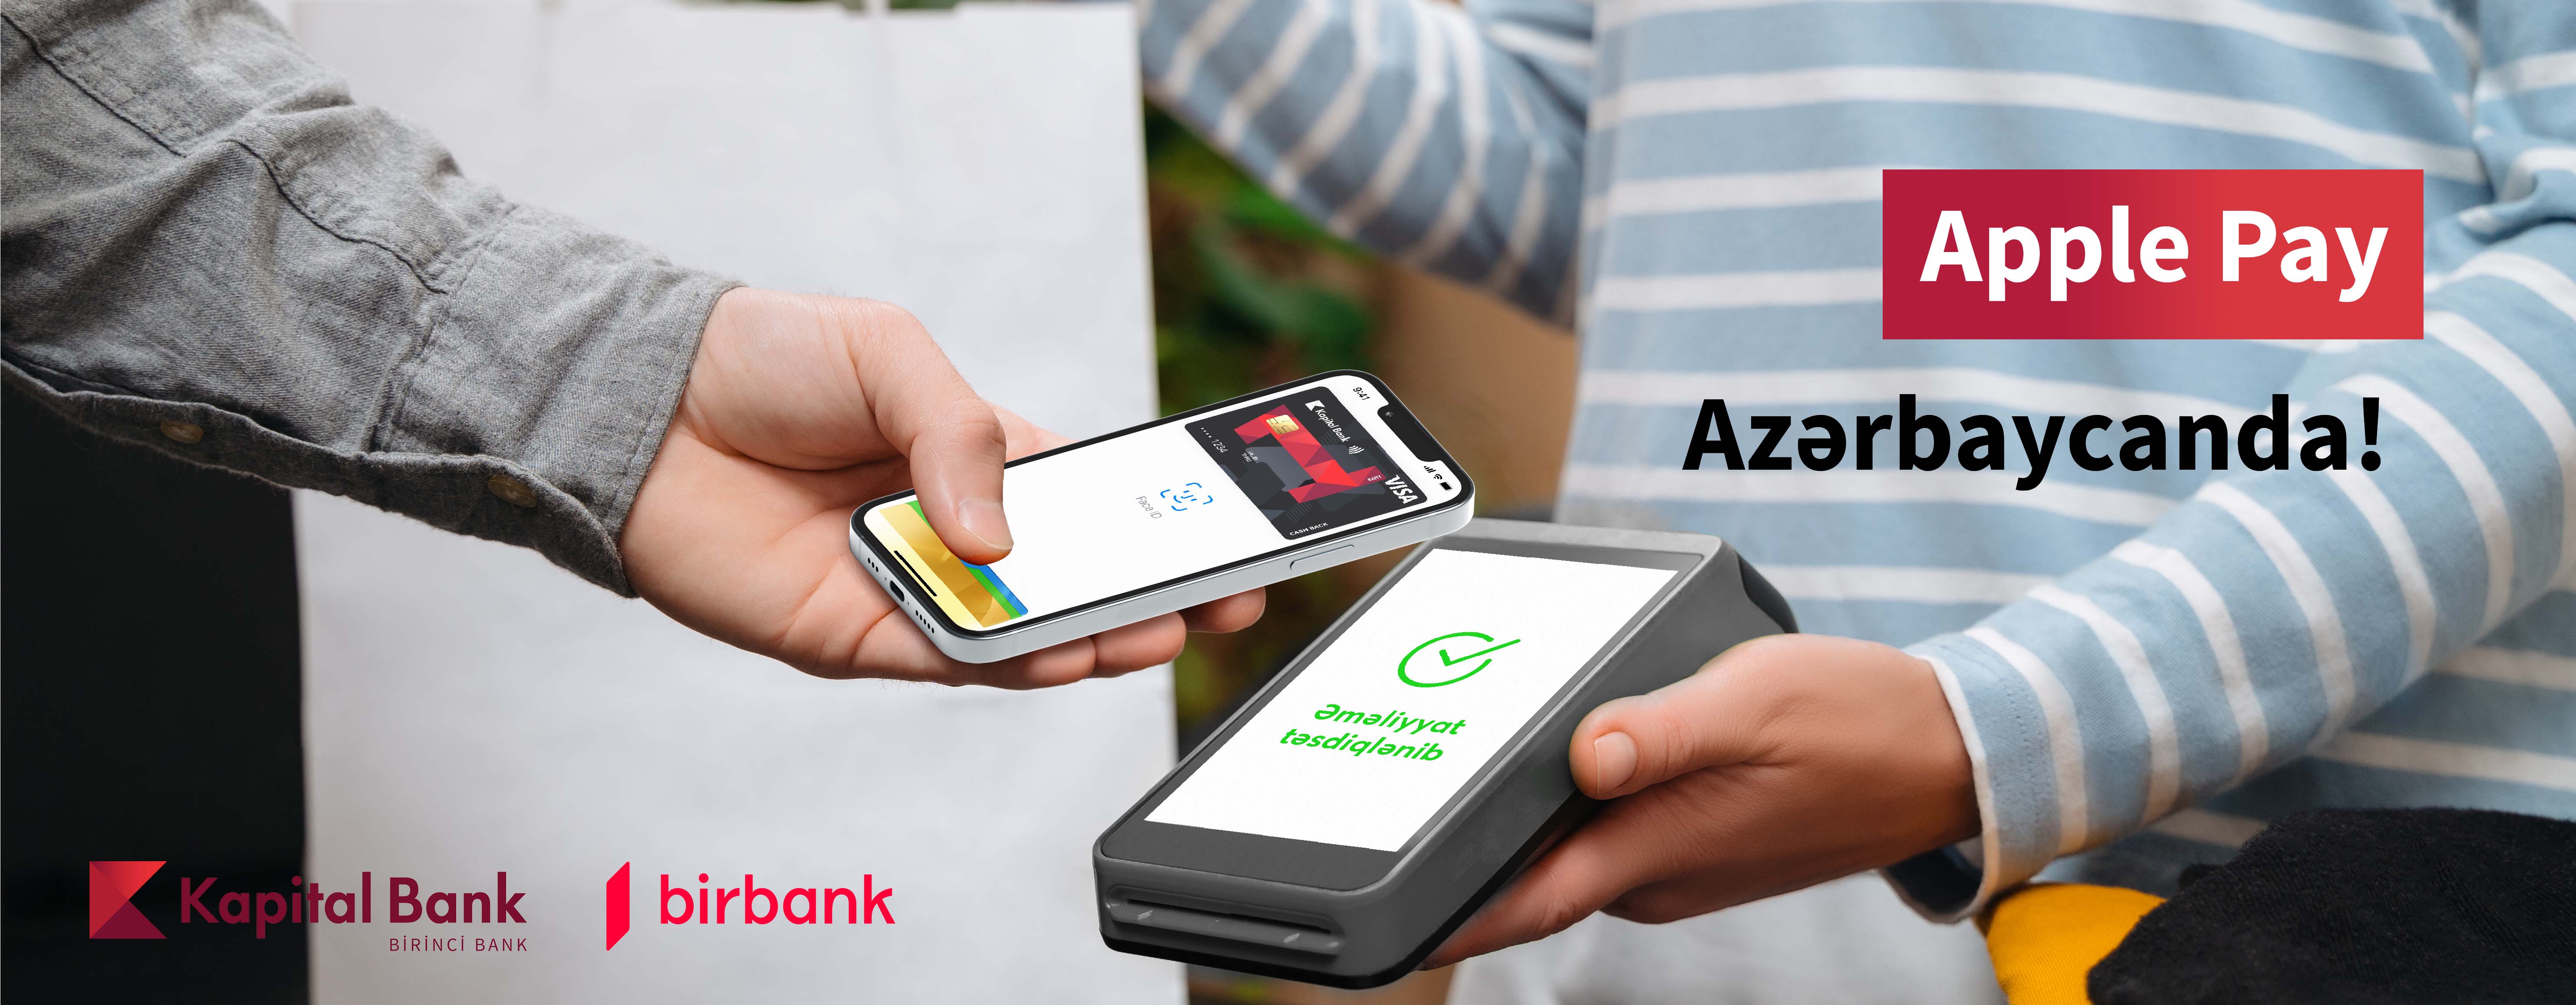 Kapital Bank запустил Apple Pay в Азербайджане